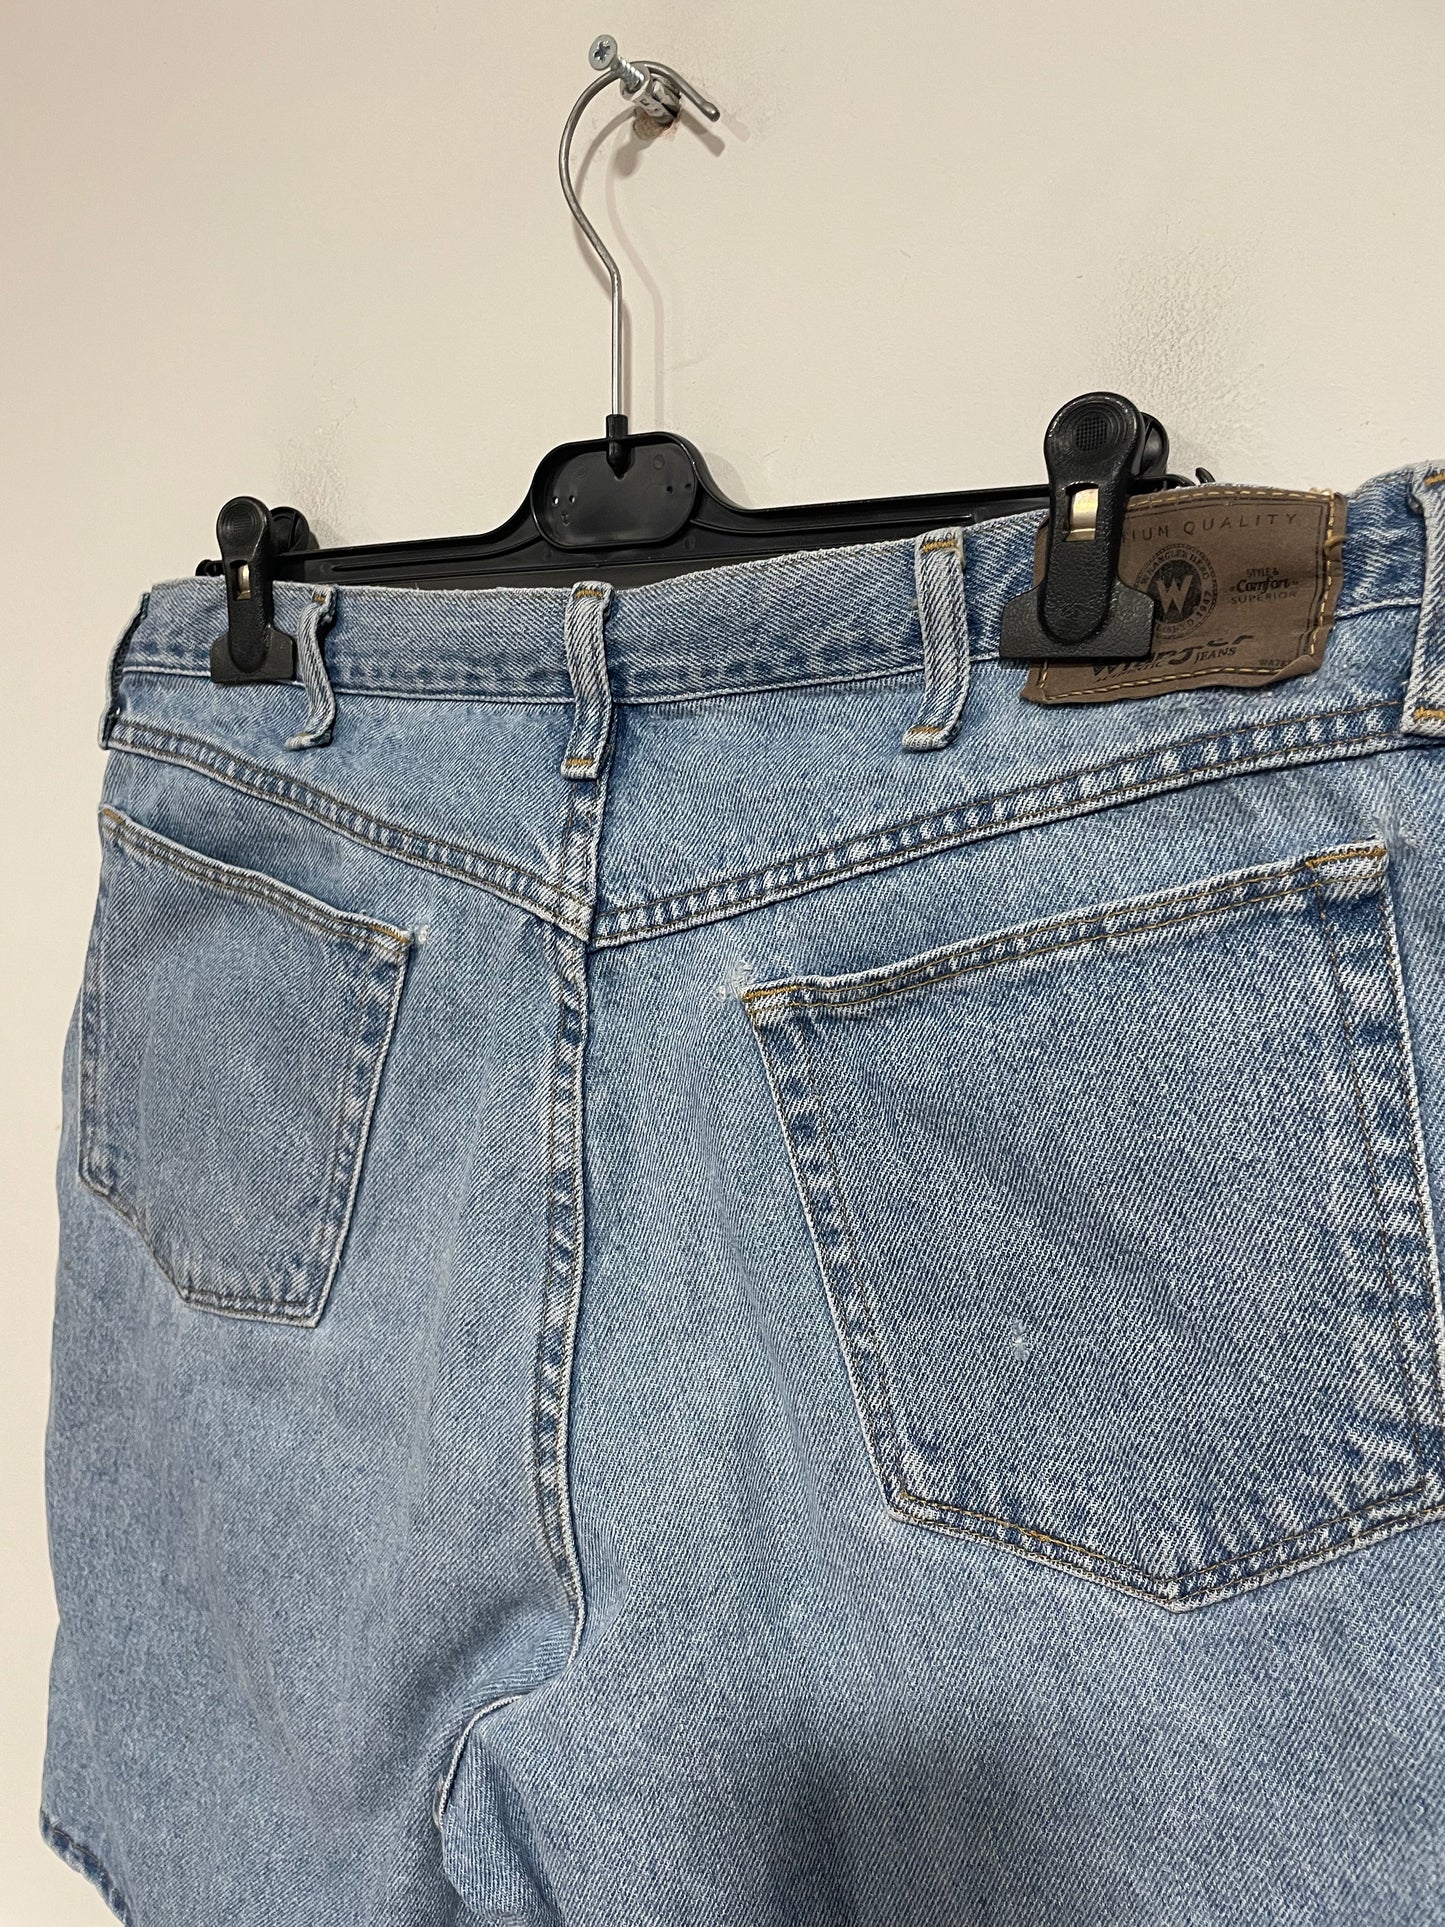 Shorts Wrangler in jeans (D813)